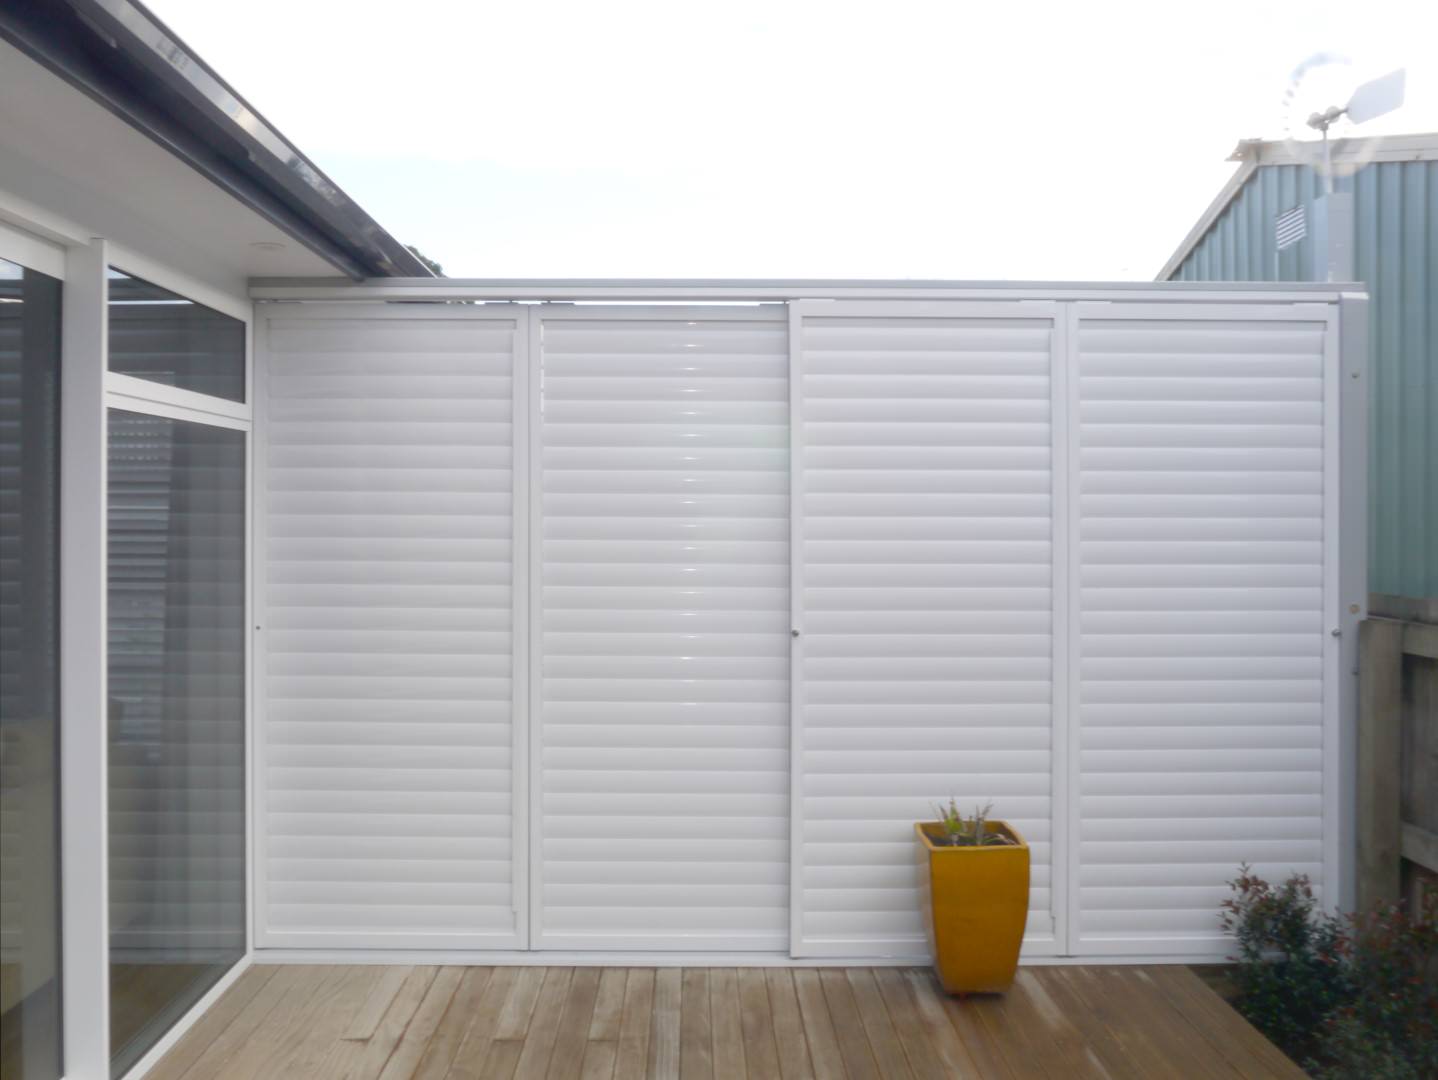 Closed outdoor shutters create a private backyard